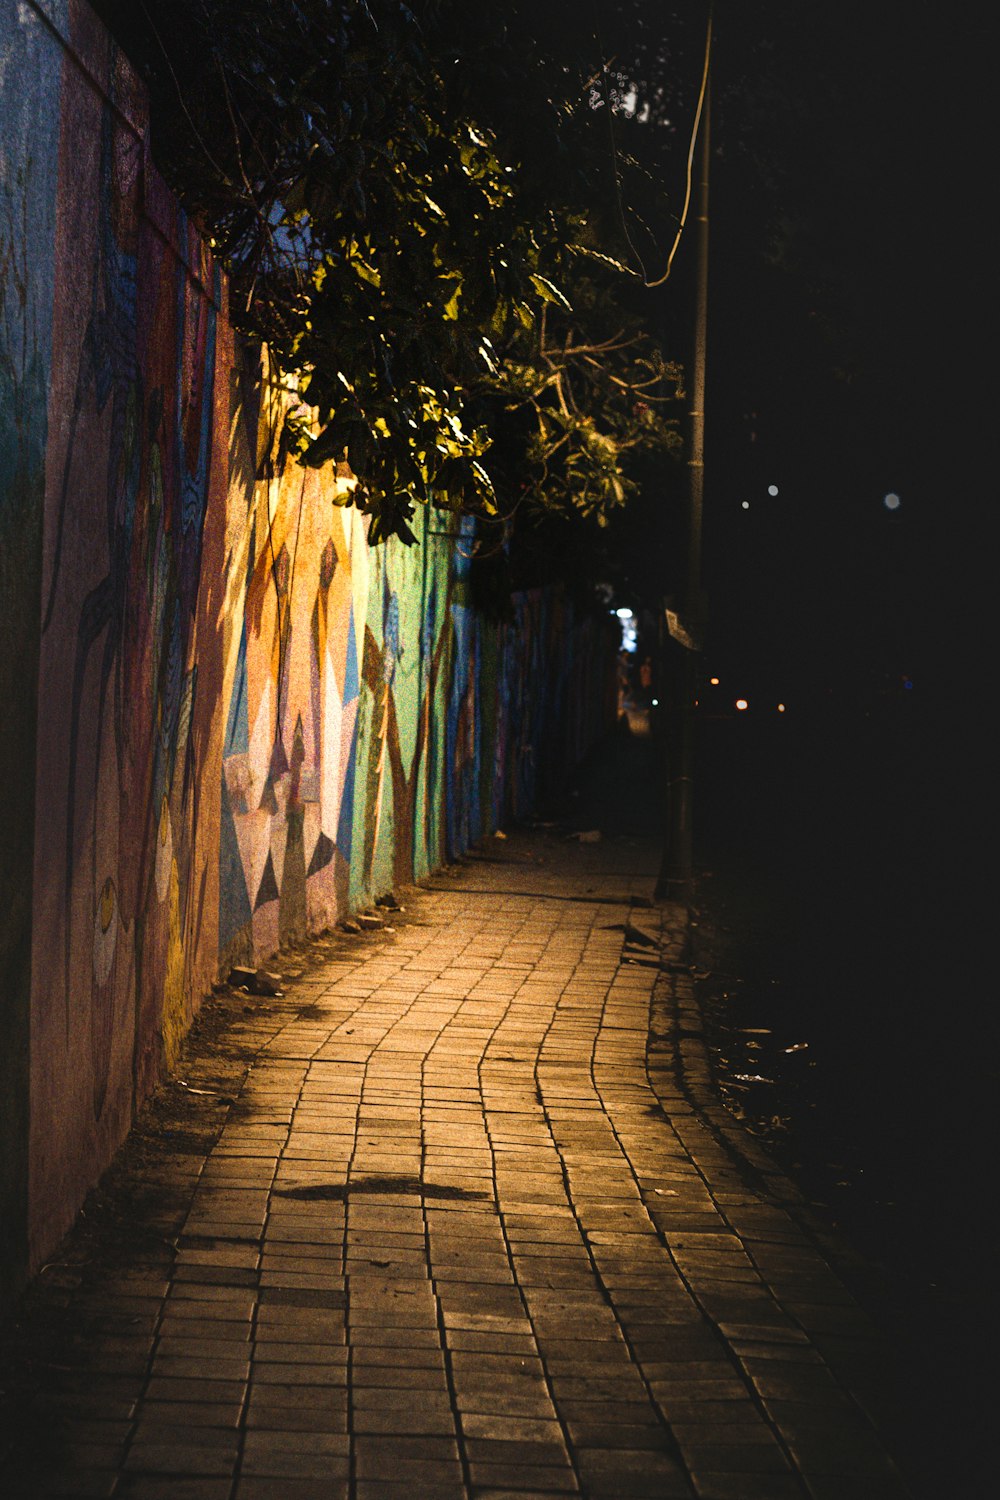 a brick sidewalk next to a wall covered in graffiti